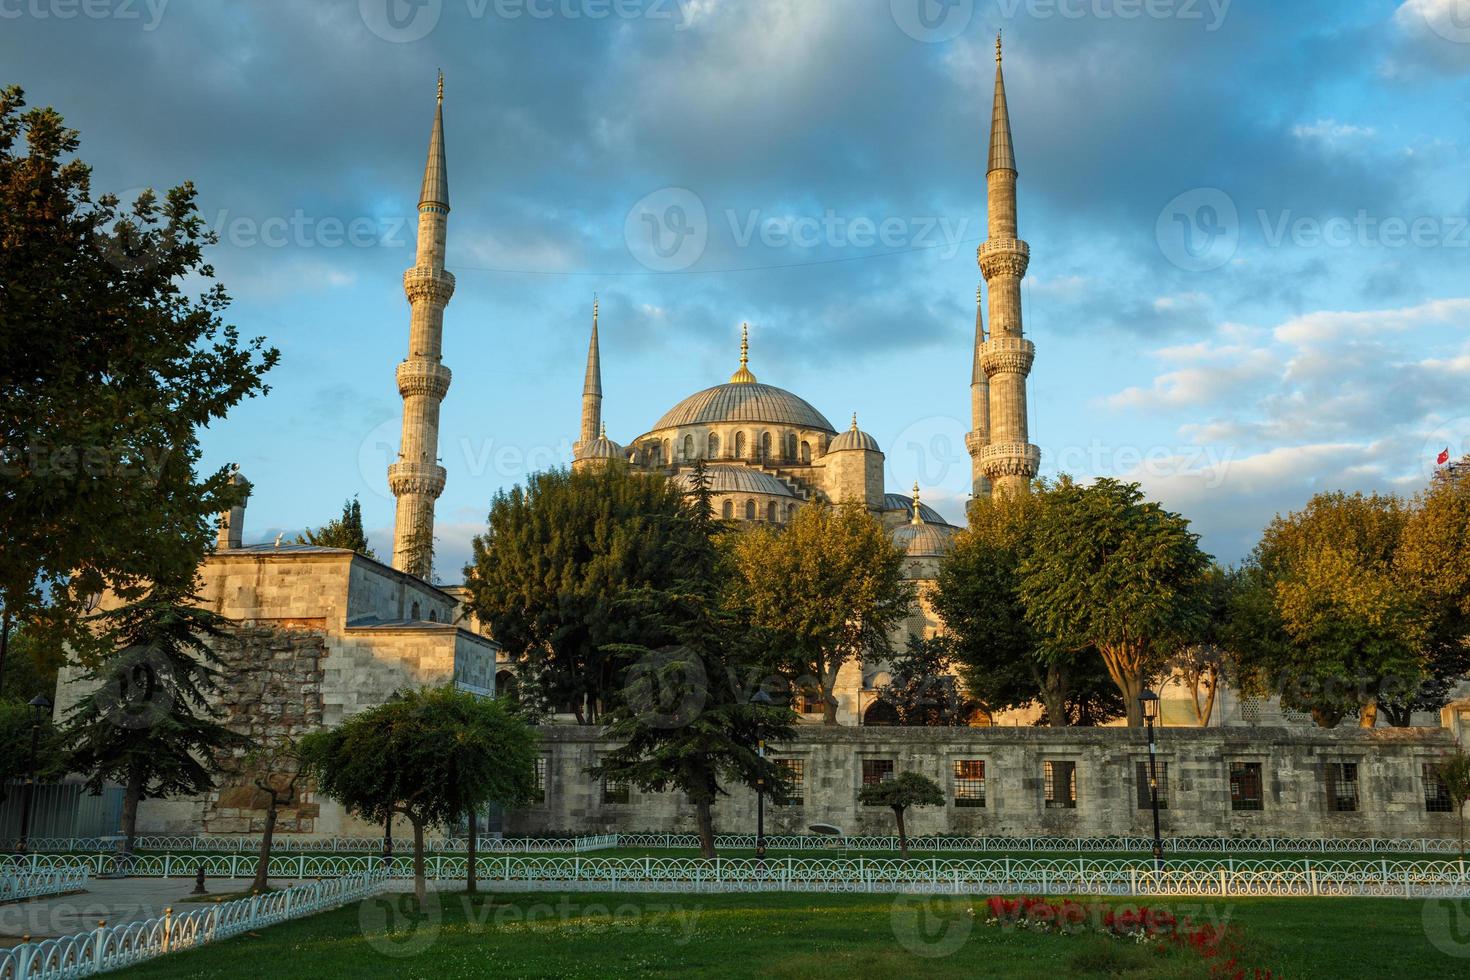 azul mezquita a amanecer, Estanbul, Turquía foto